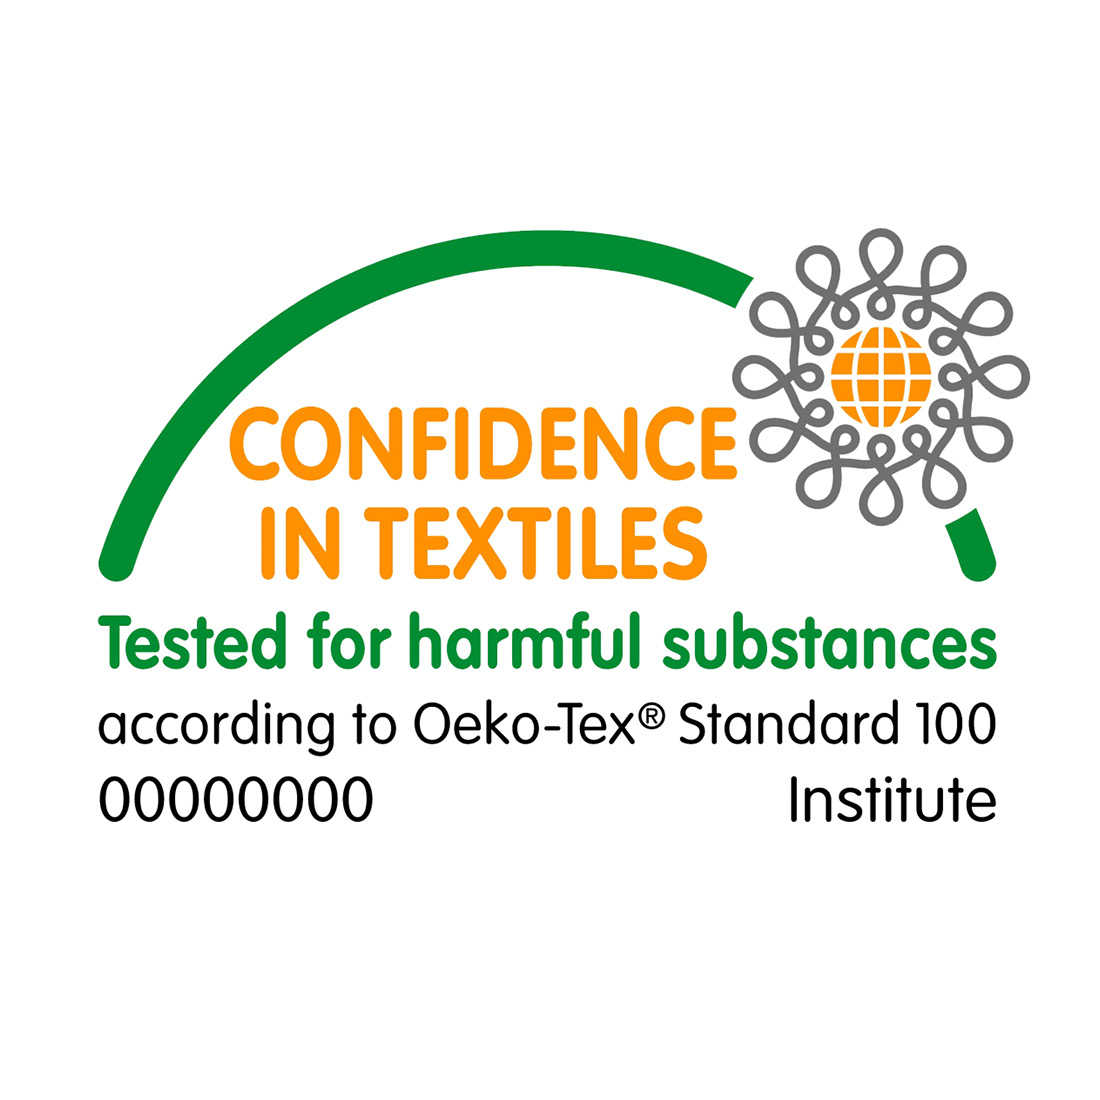 Logga hållbarhet Trygg textil Öko-Tex